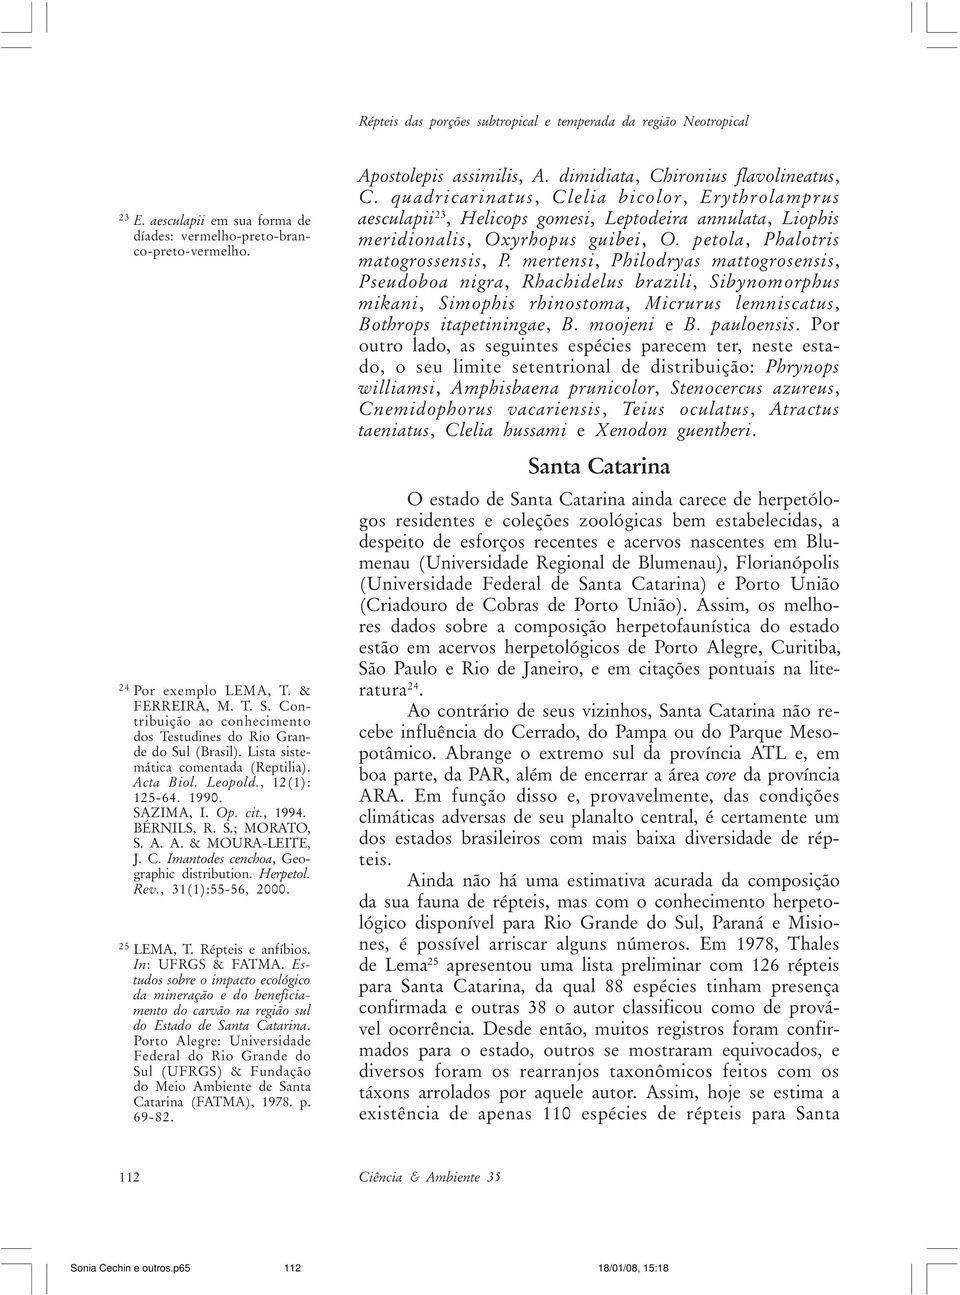 A. A. & MOURA-LEITE, J. C. Imantodes cenchoa, Geographic distribution. Herpetol. Rev., 31(1):55-56, 2000. 25 LEMA, T. Répteis e anfíbios. In: UFRGS & FATMA.